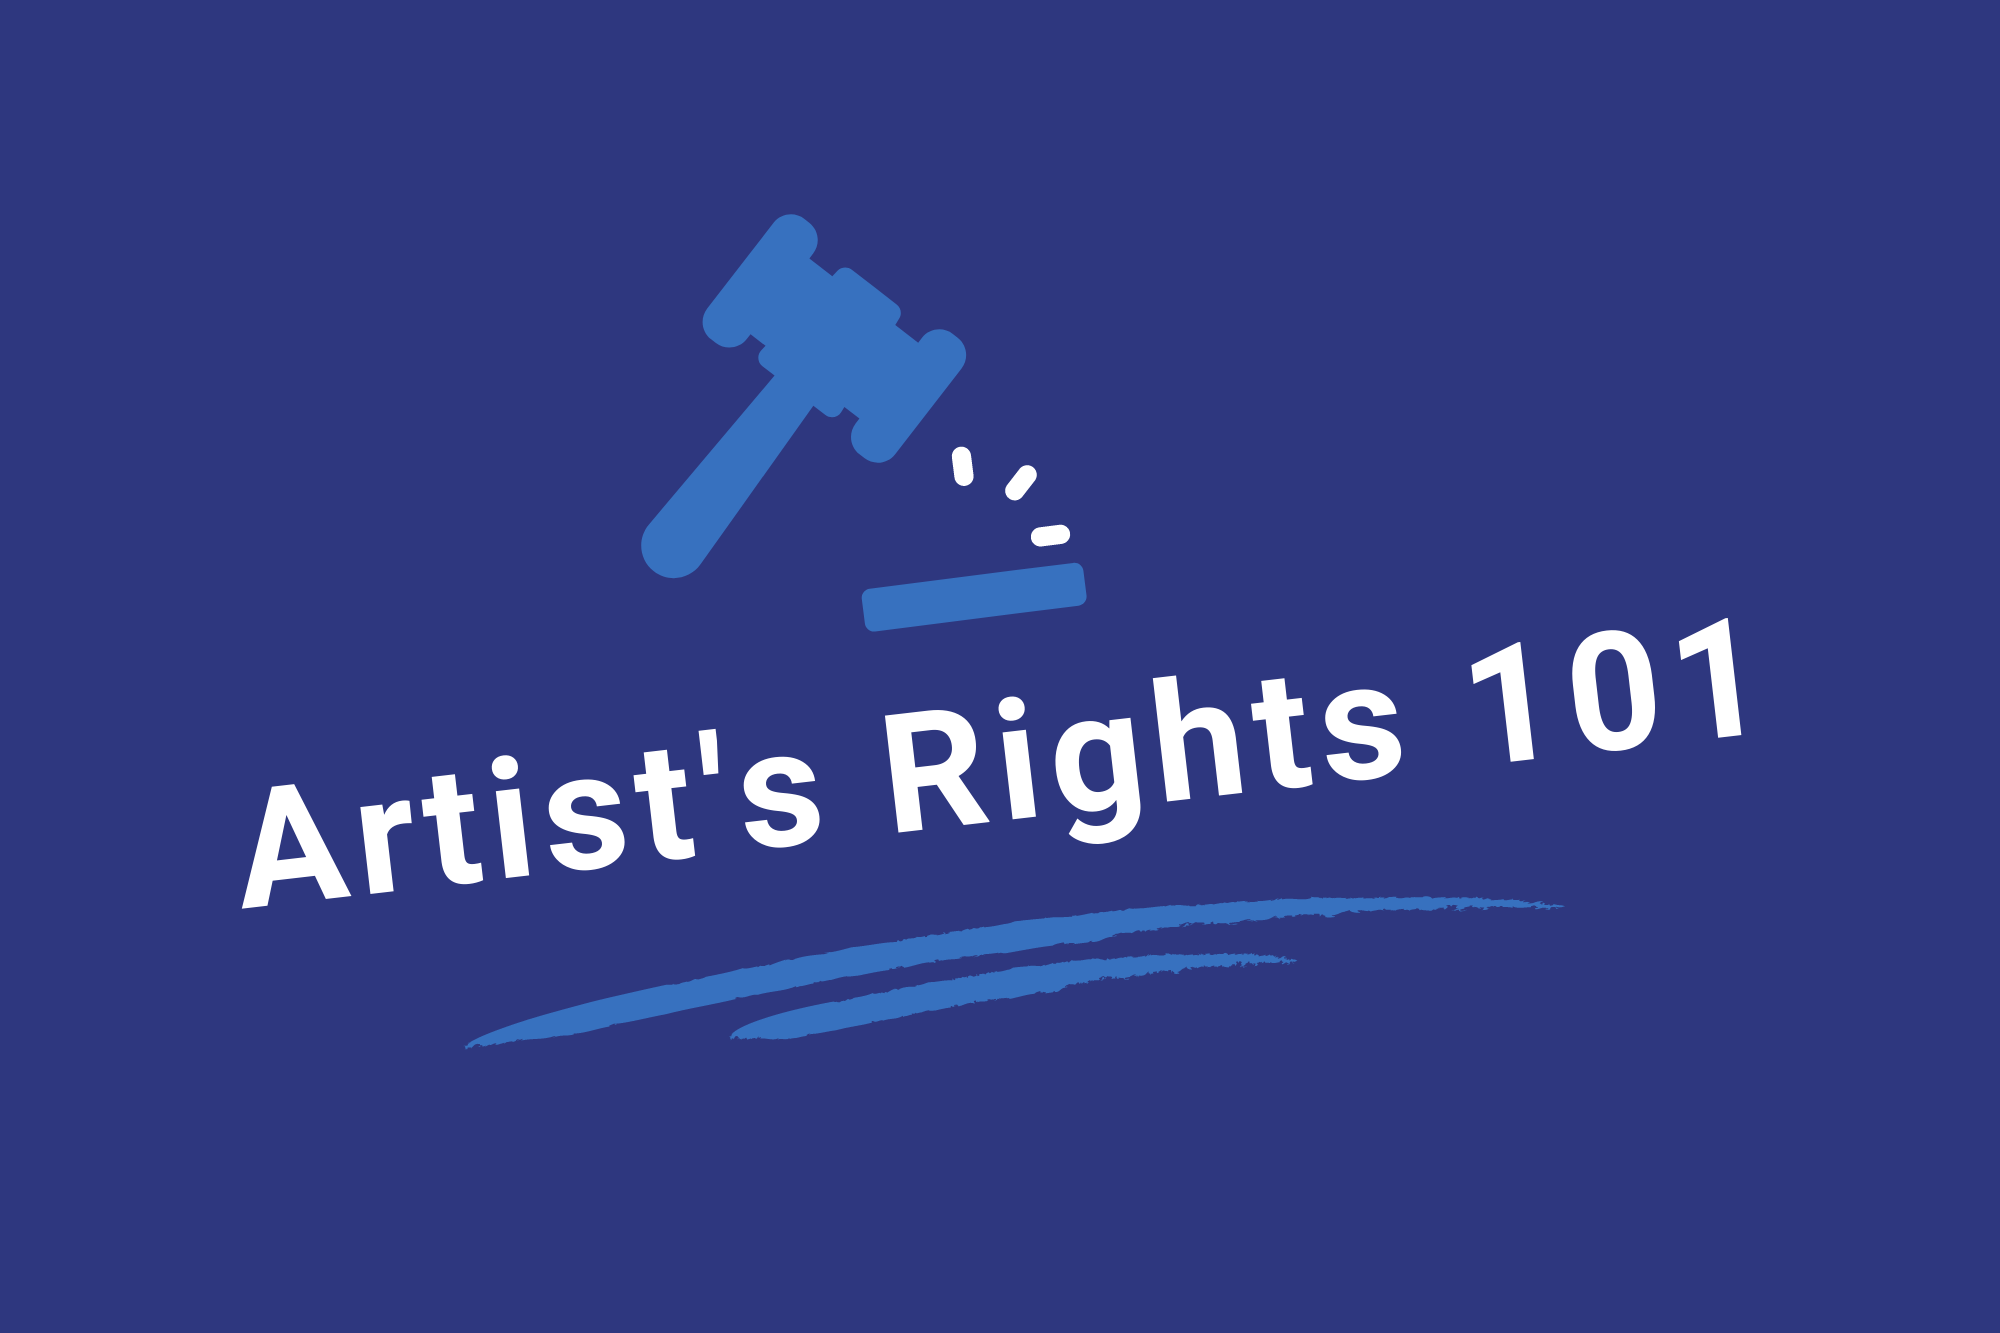 Artist's Rights 101